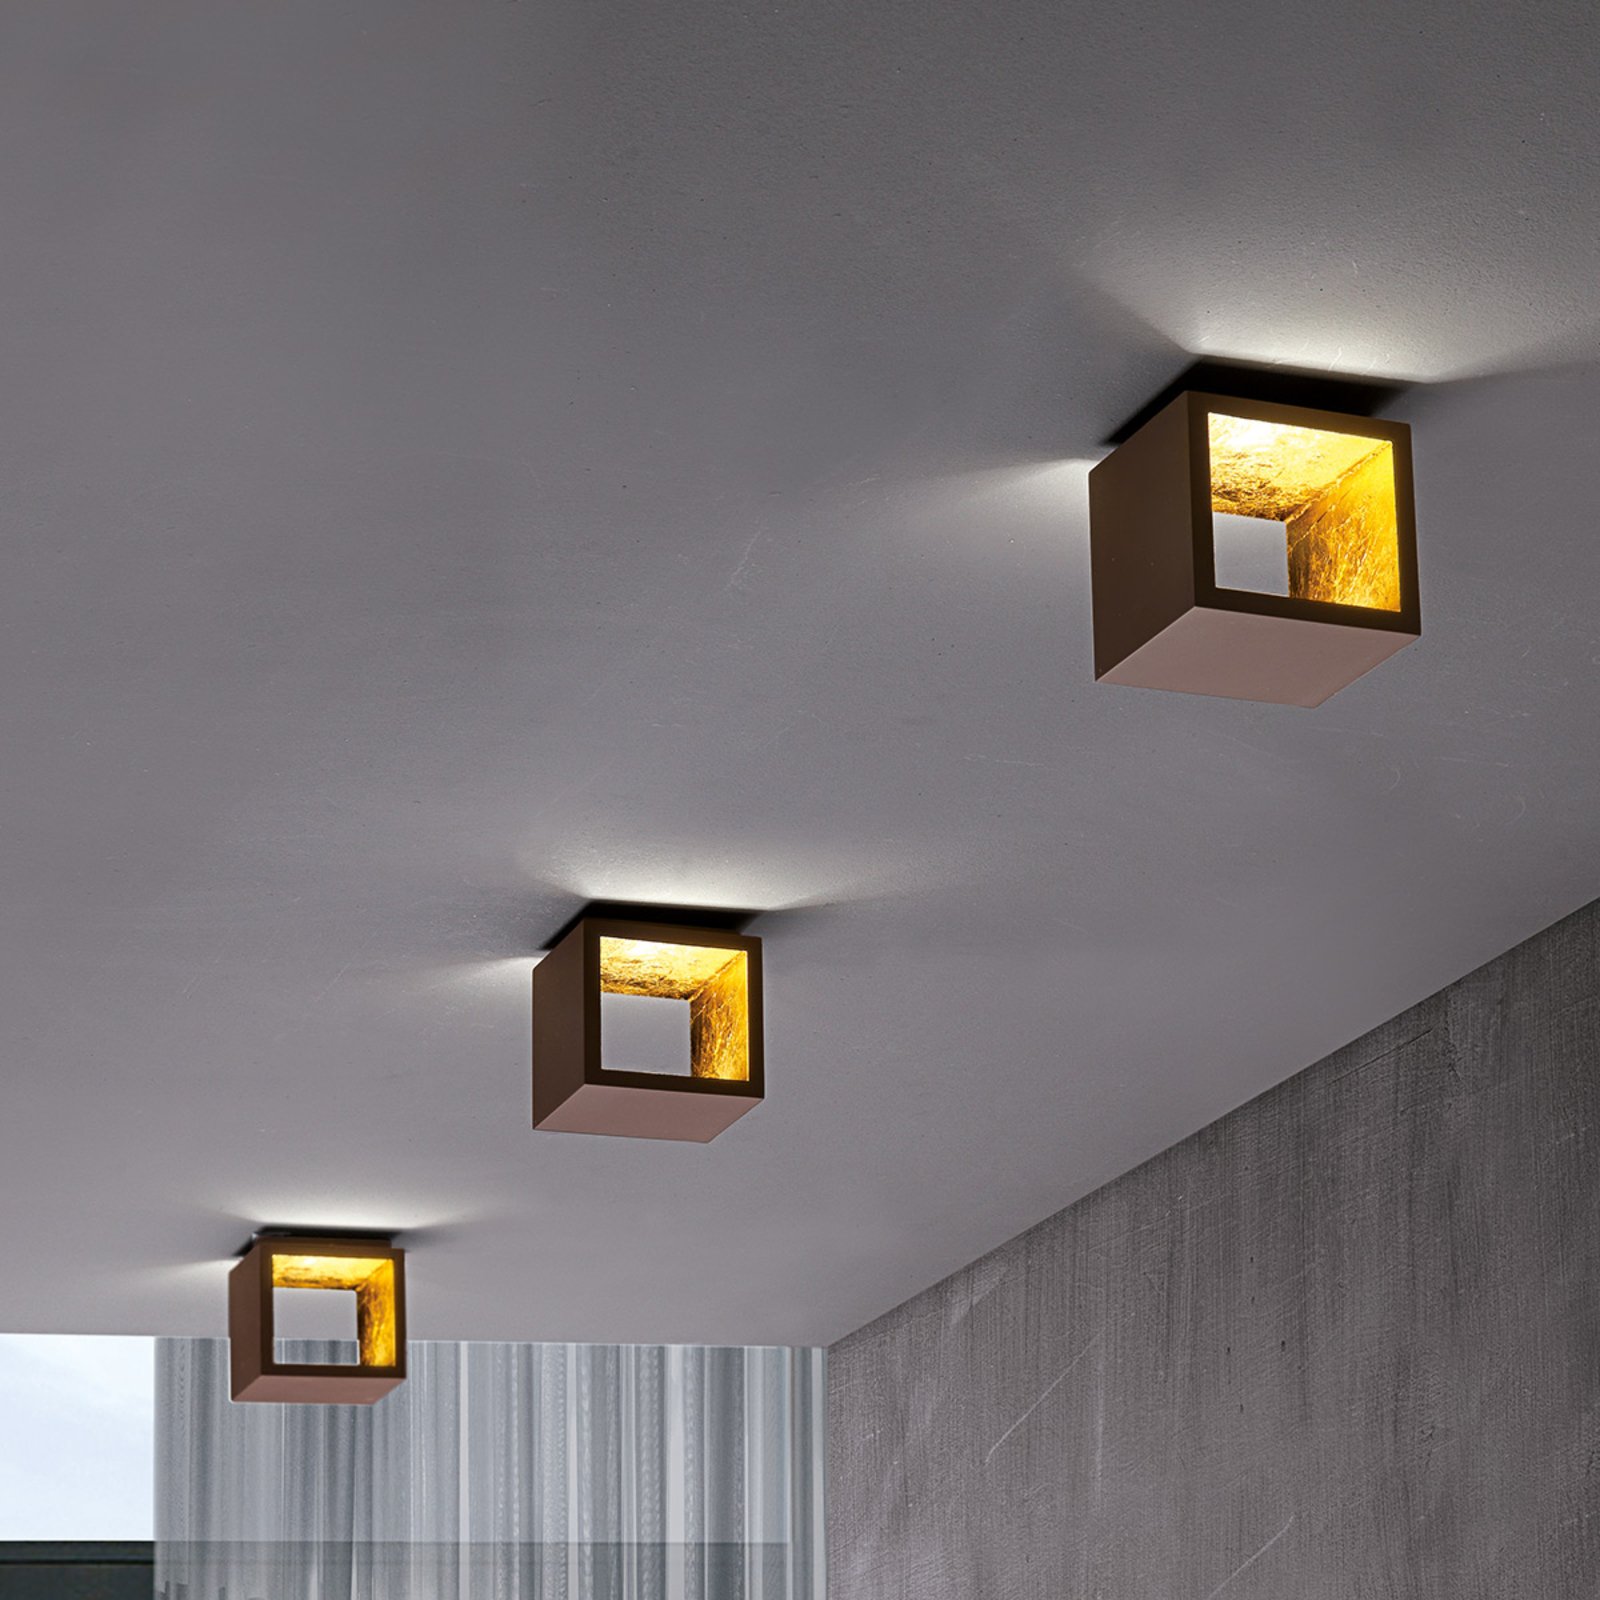 ICONE Cubò - LED plafondlamp, 10 W, bruin/goud